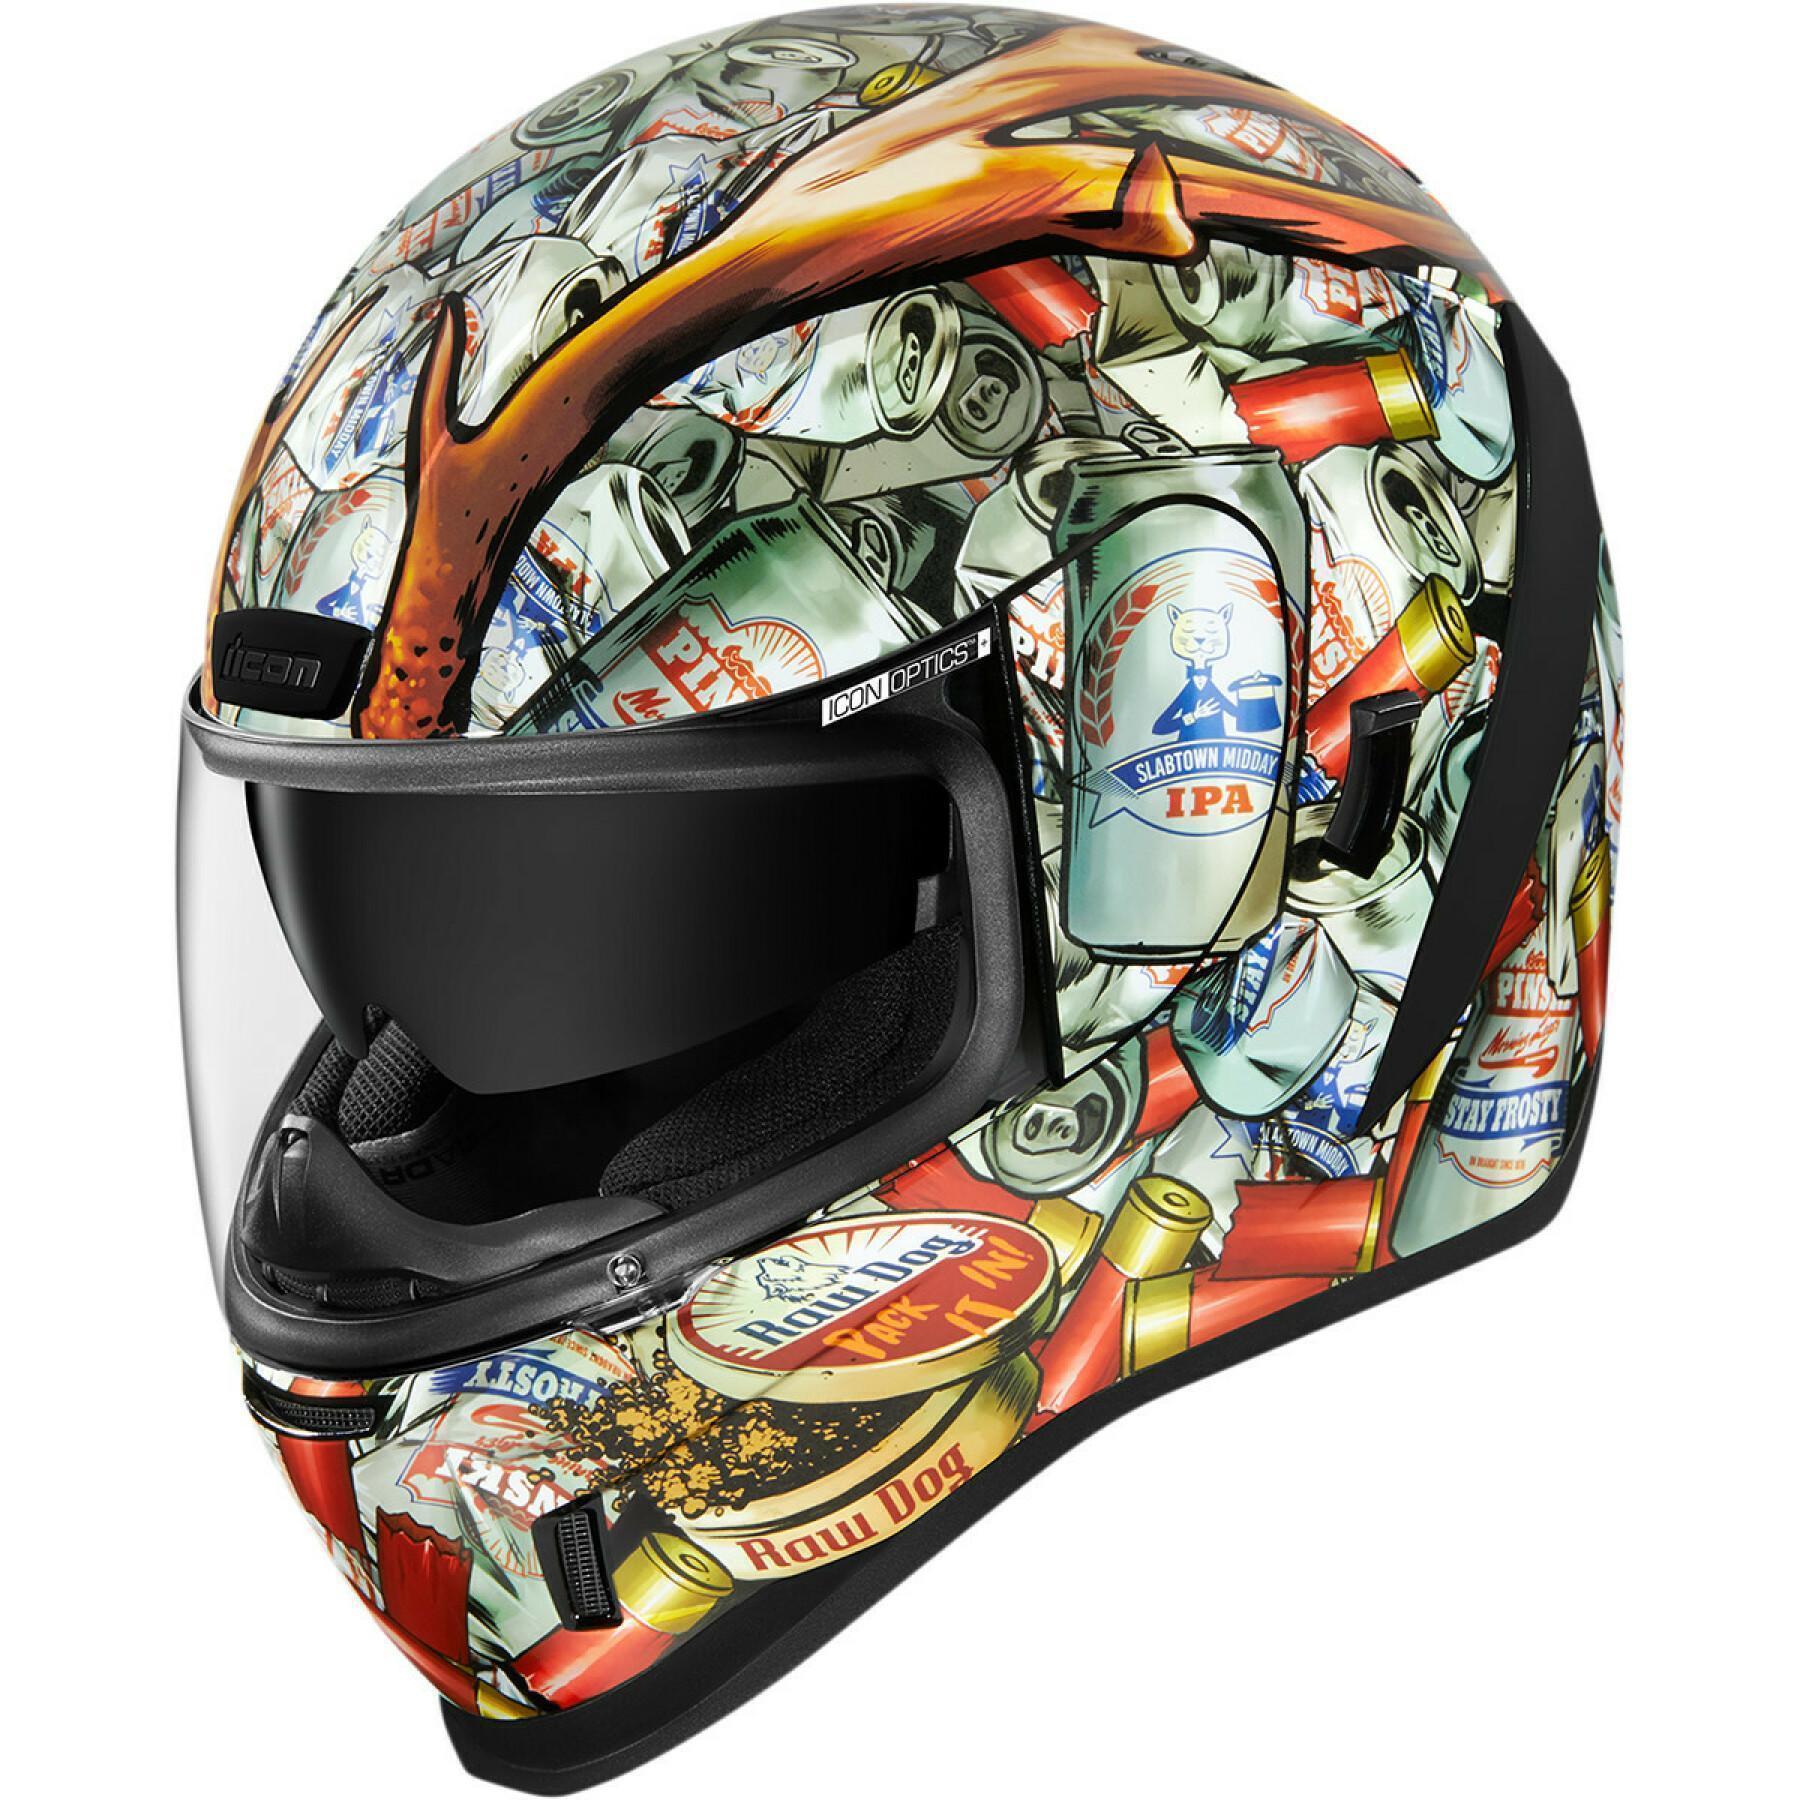 Full face motorcycle helmet Icon afrm buckfever